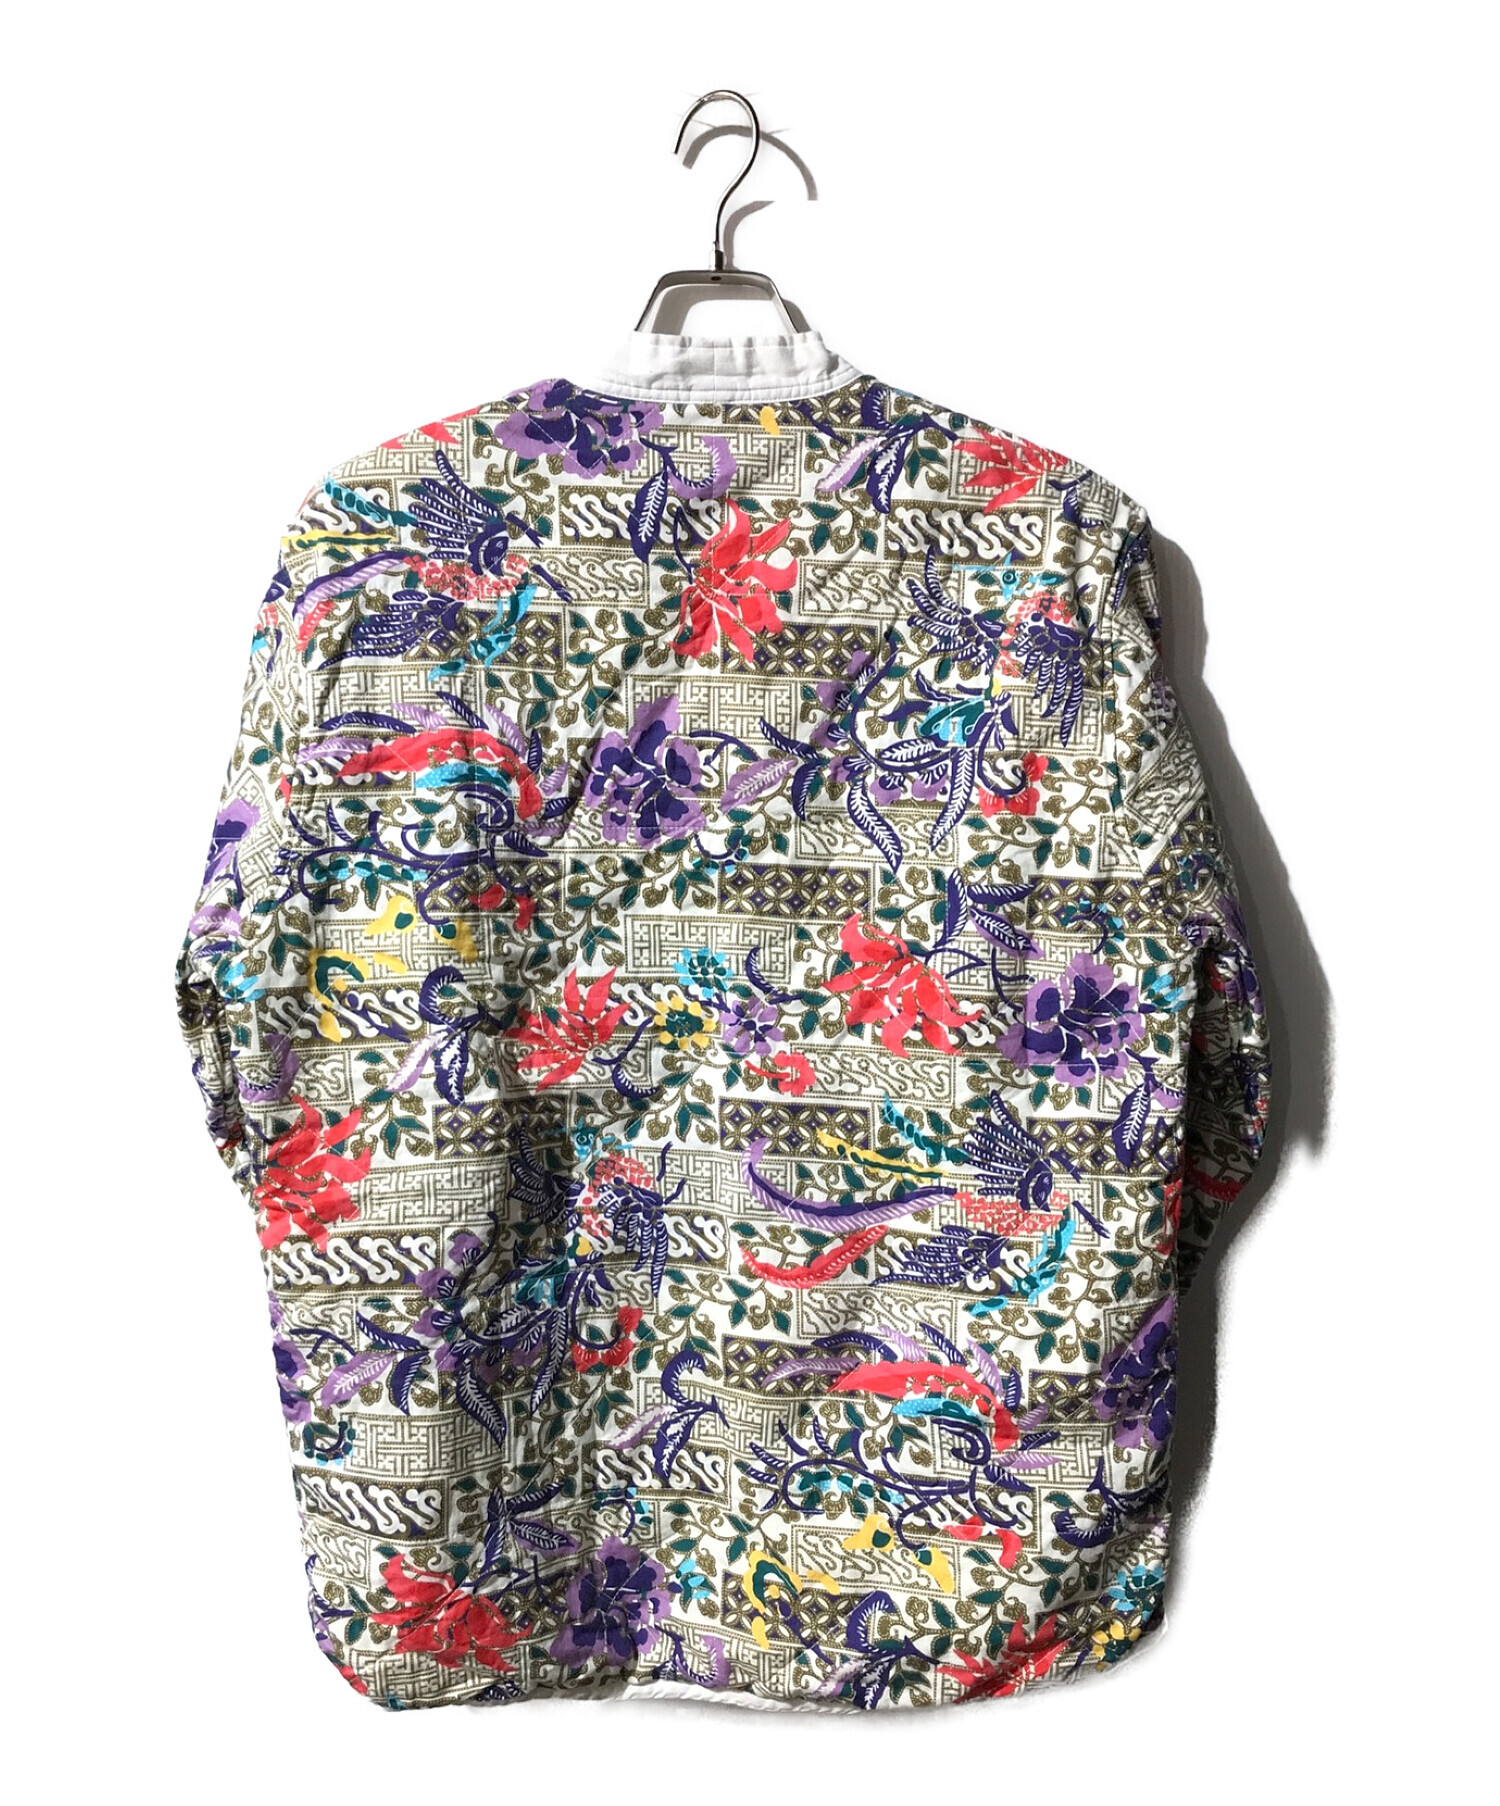 Supreme (シュプリーム) Quilted Paradise Jacket マルチカラー サイズ:Ⅿ